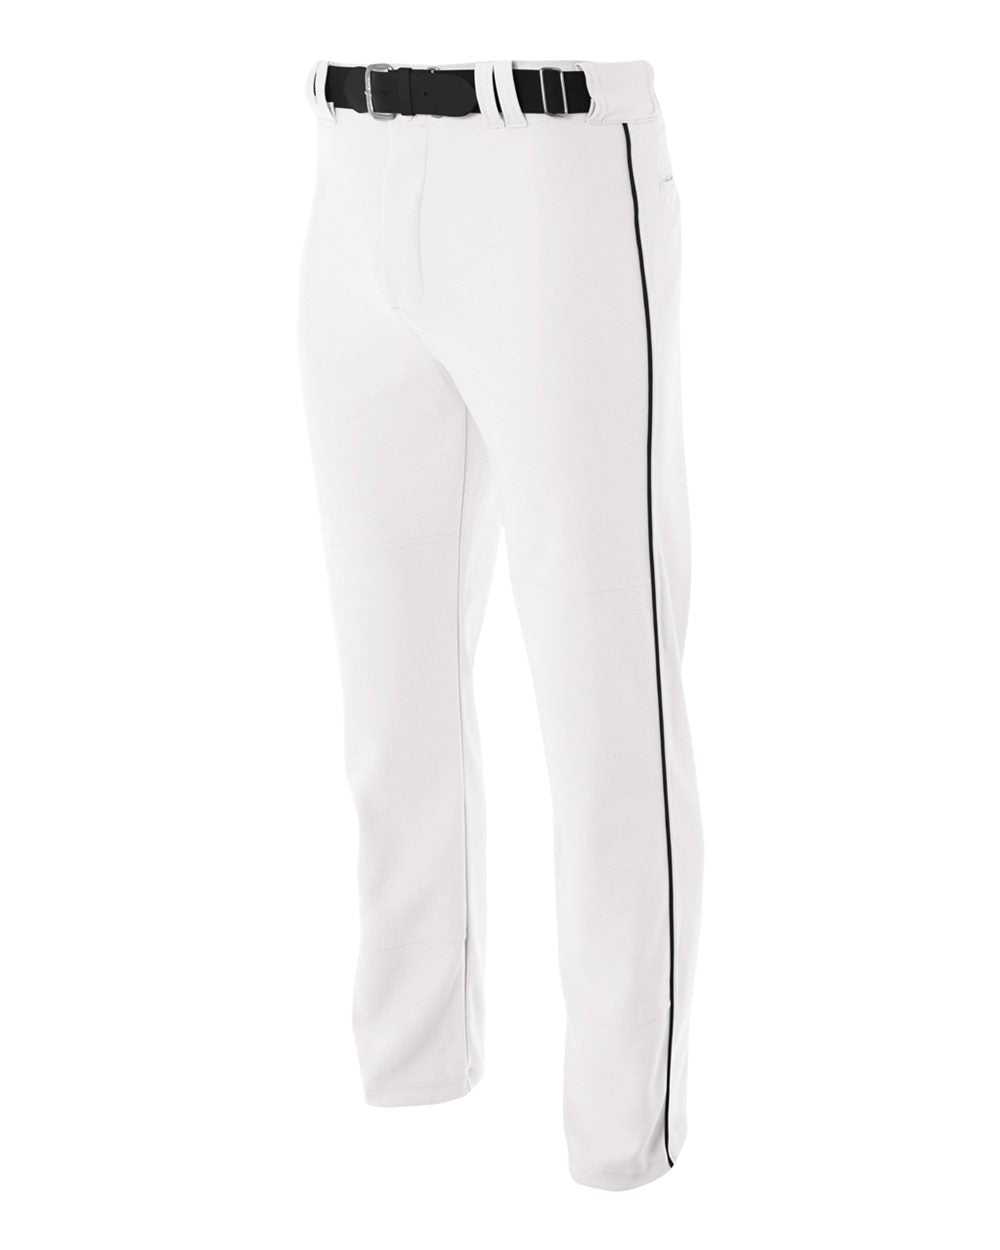 A4 N6162 Pro Style Open Bottom Baggy Cut Baseball Pant - White Black - HIT a Double